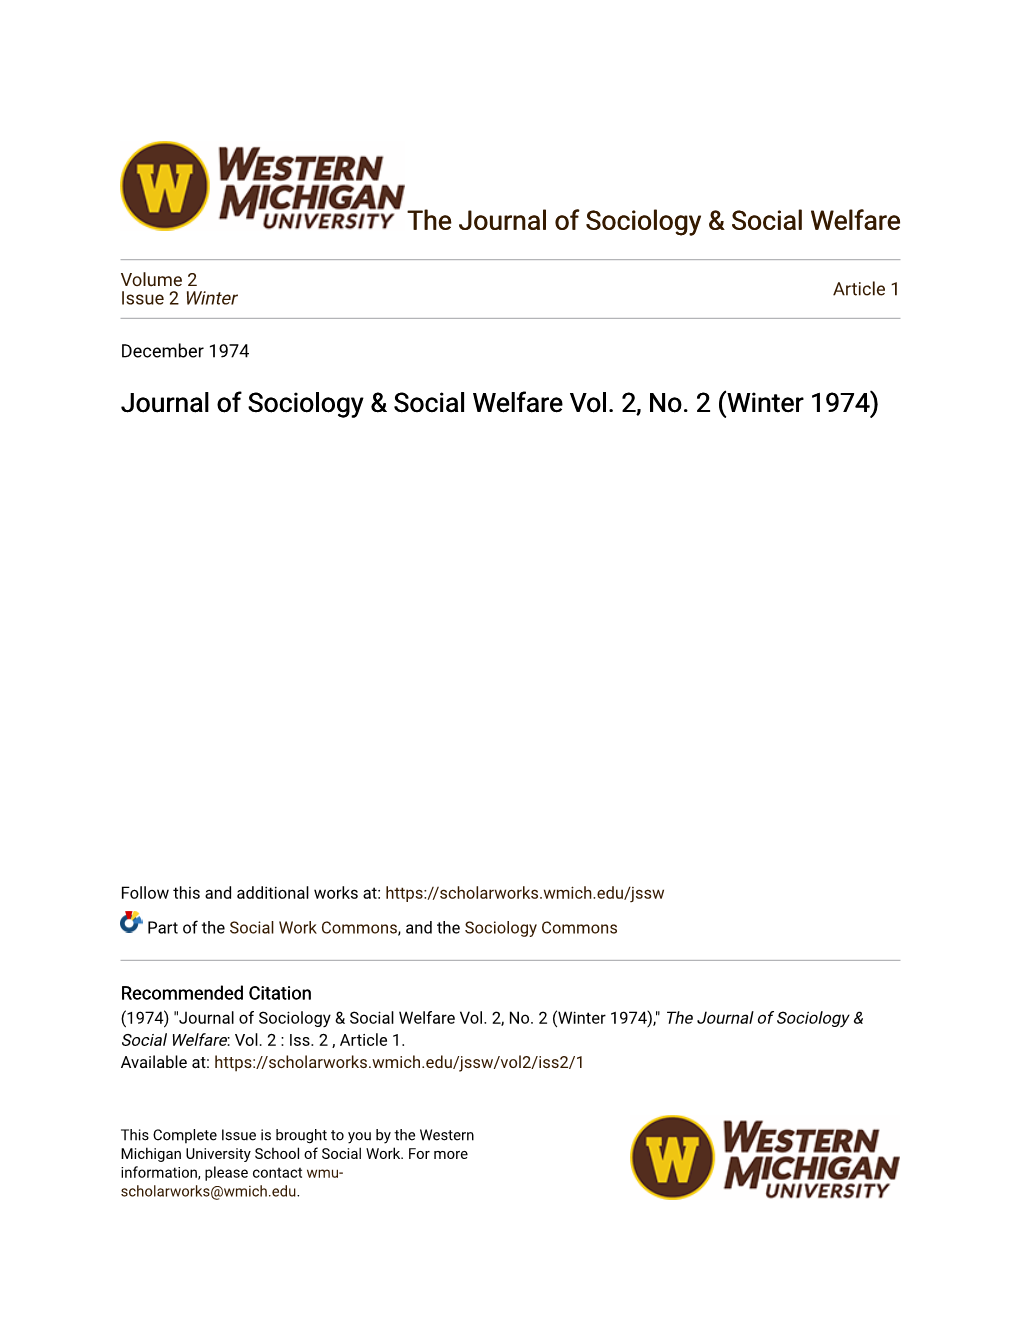 Journal of Sociology & Social Welfare Vol. 2, No. 2